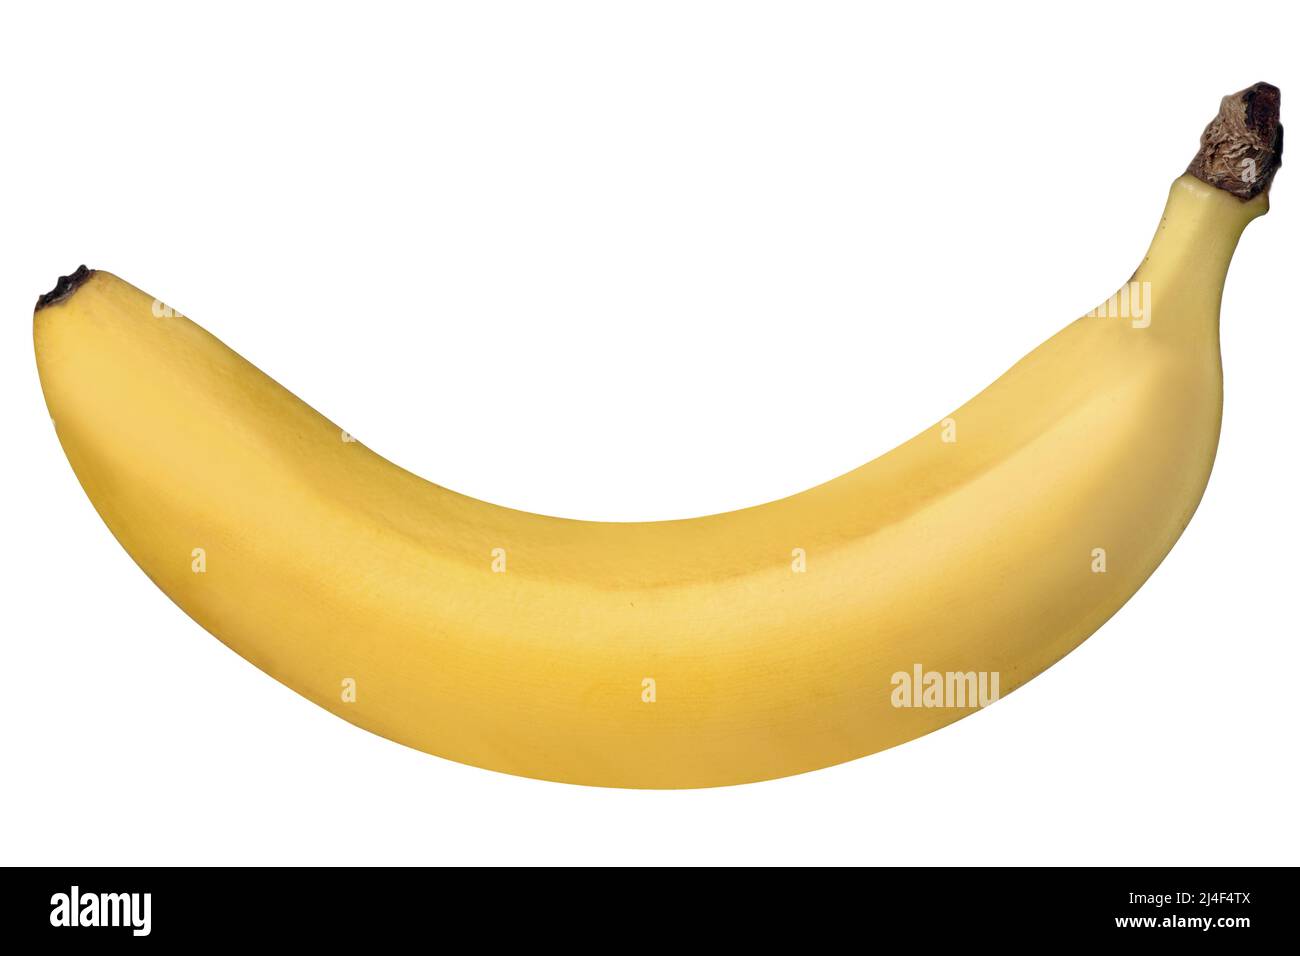 Banana immagine. Banana fresca gialla isolata su sfondo bianco Foto Stock